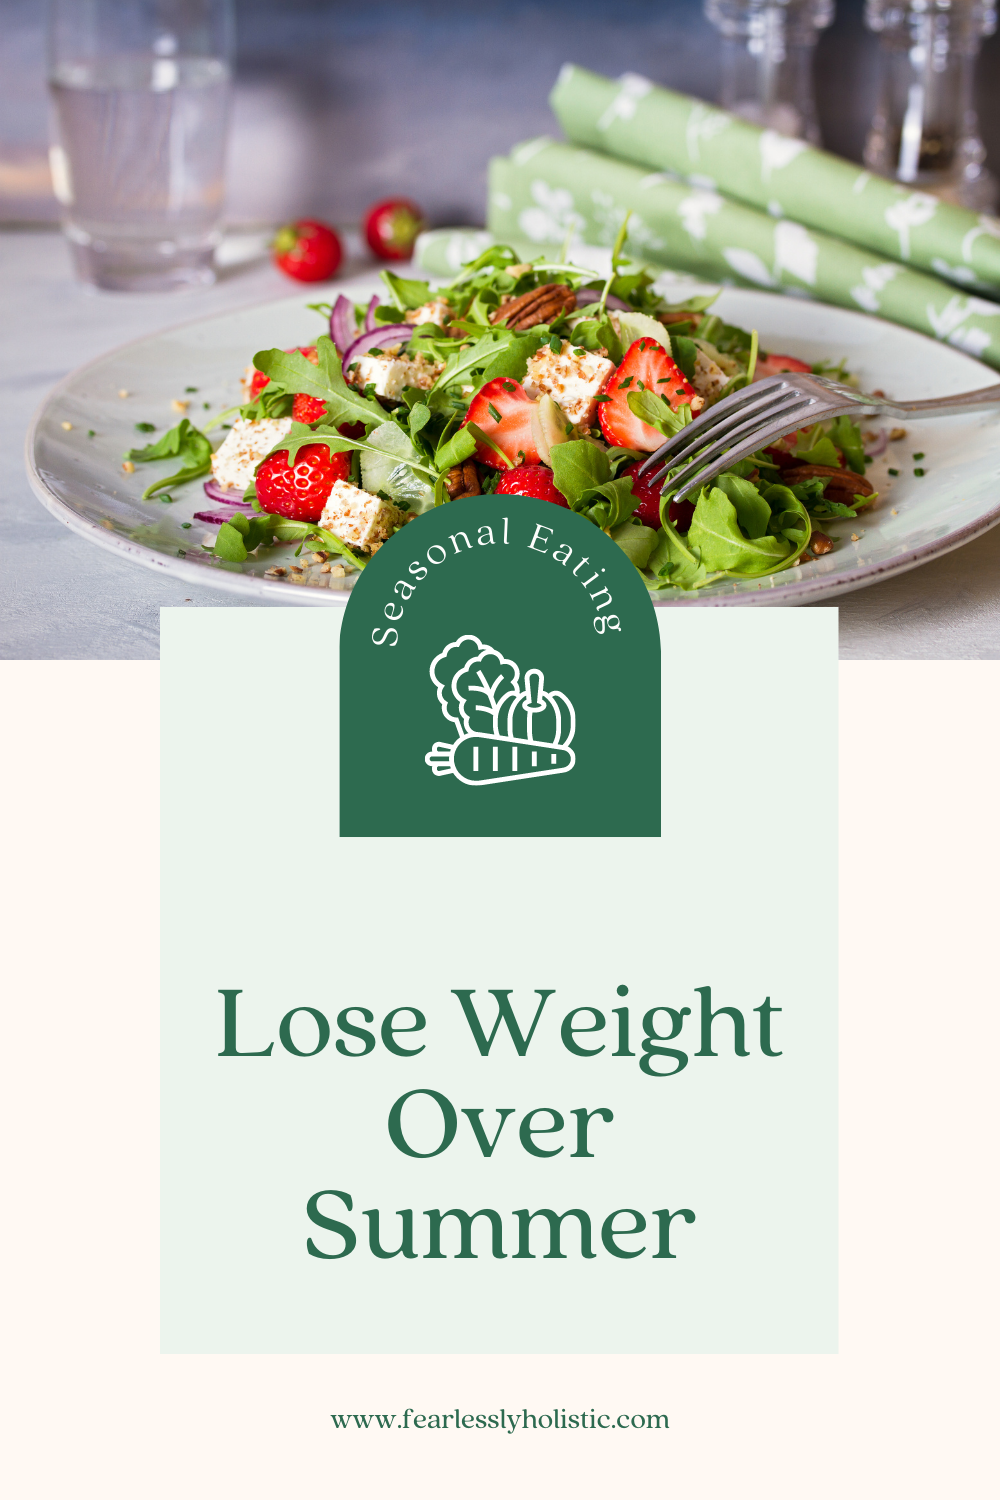 Seasonal Eating: Lose Weight Over Summer